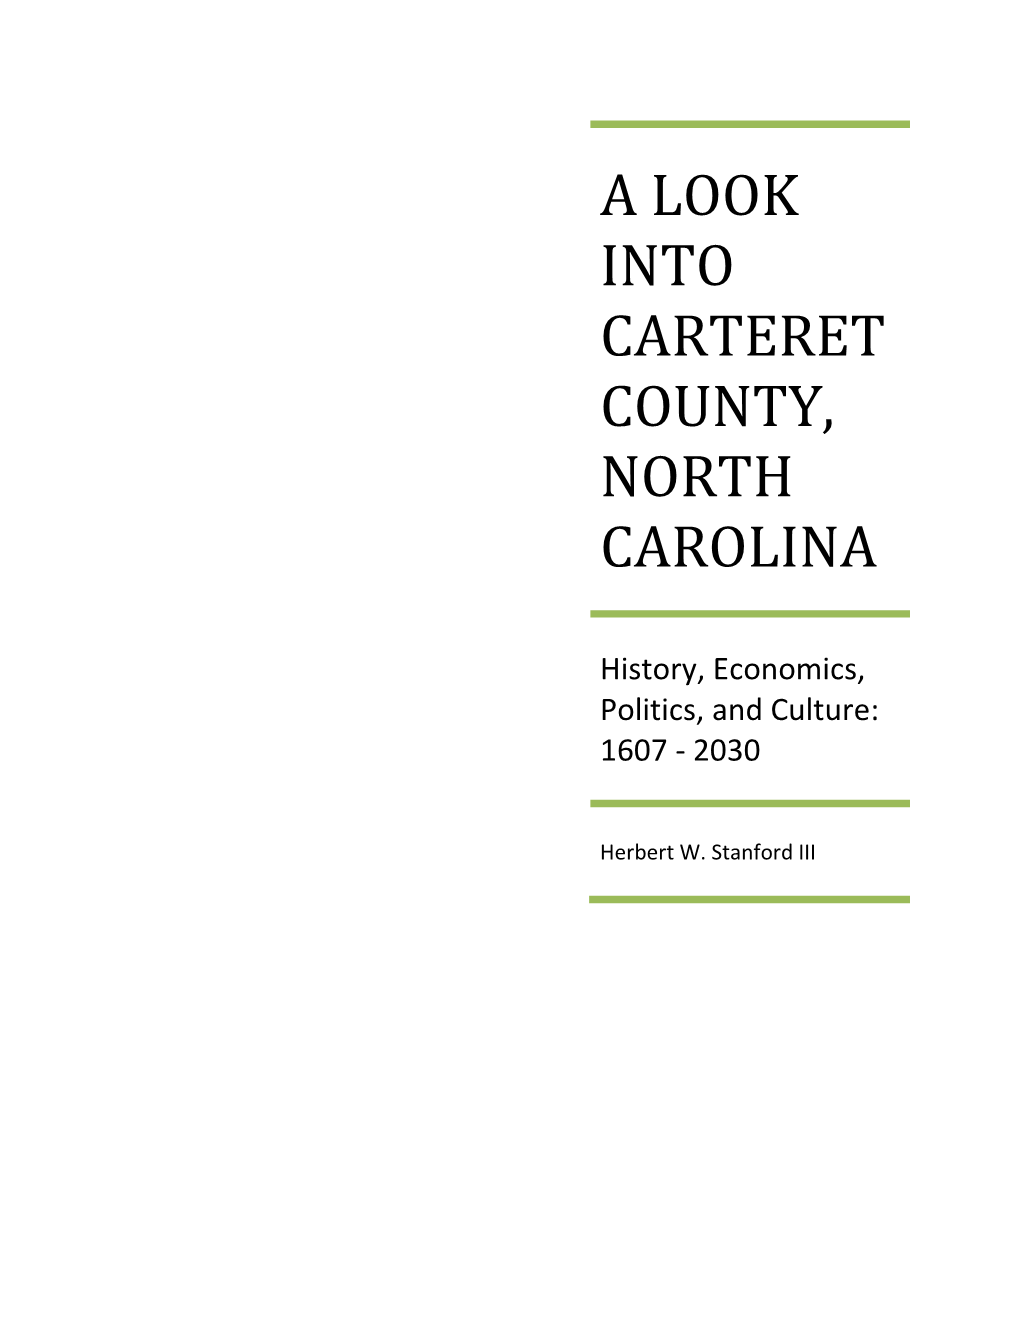 A Look Into Carteret County, North Carolina